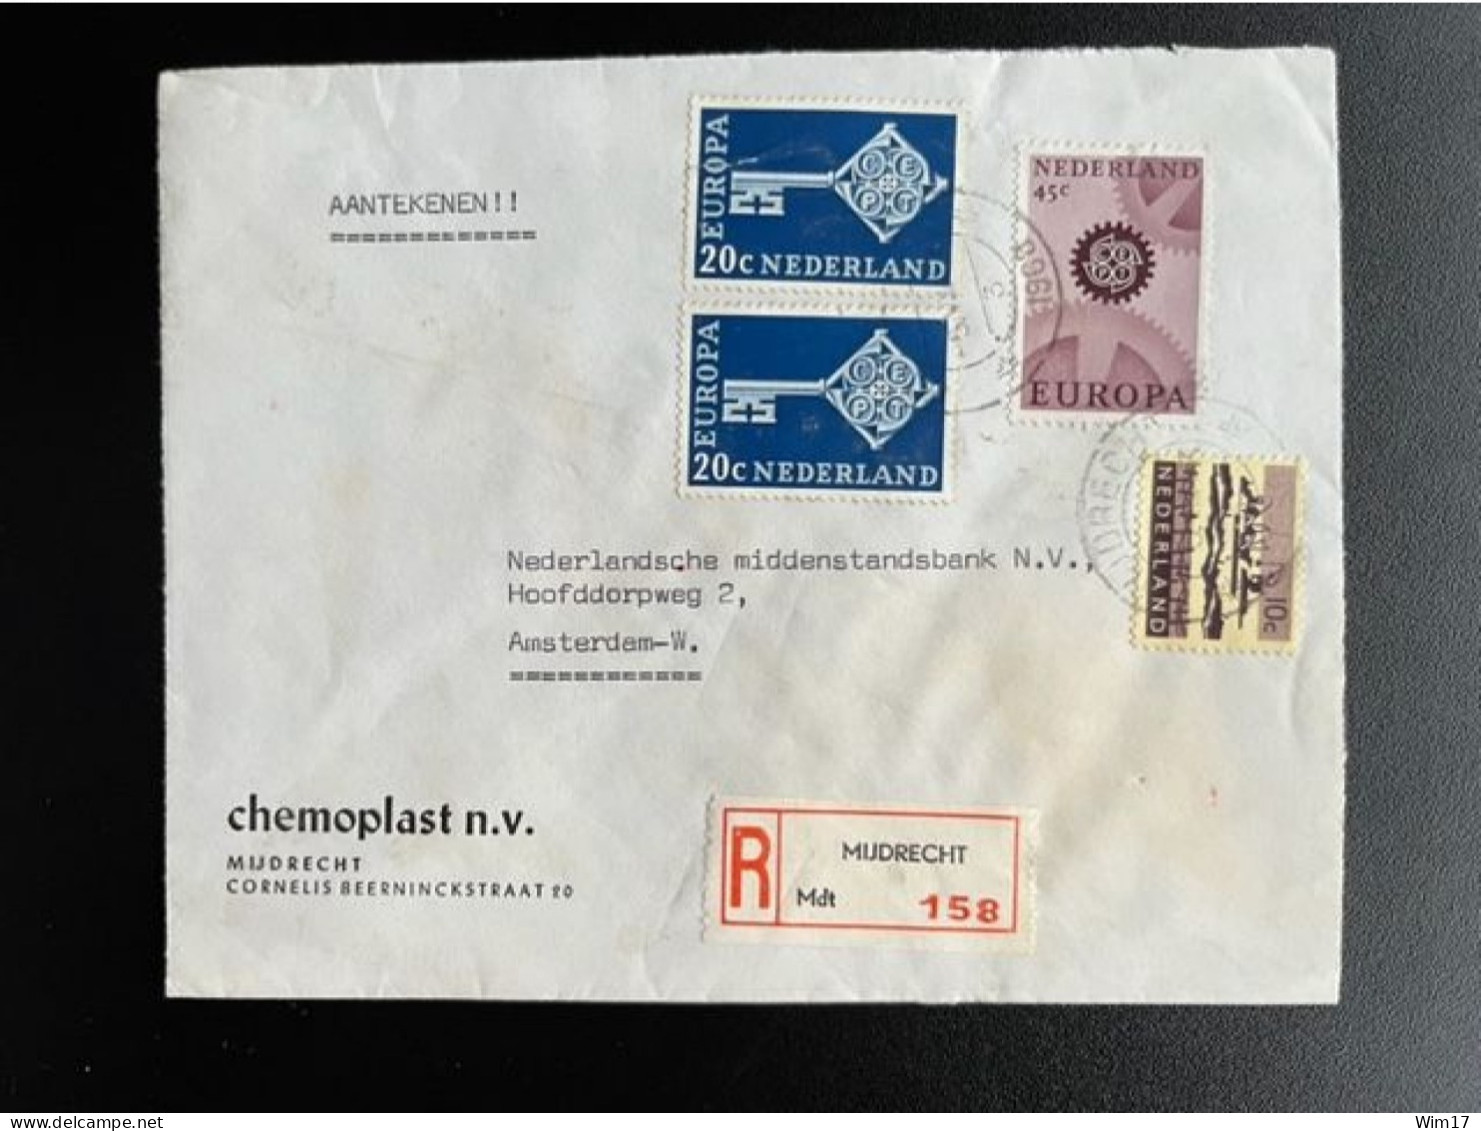 NETHERLANDS 1968 REGISTERED LETTER MIJDRECHT TO AMSTERDAM 05-08-1968 NEDERLAND AANGETEKEND - Covers & Documents